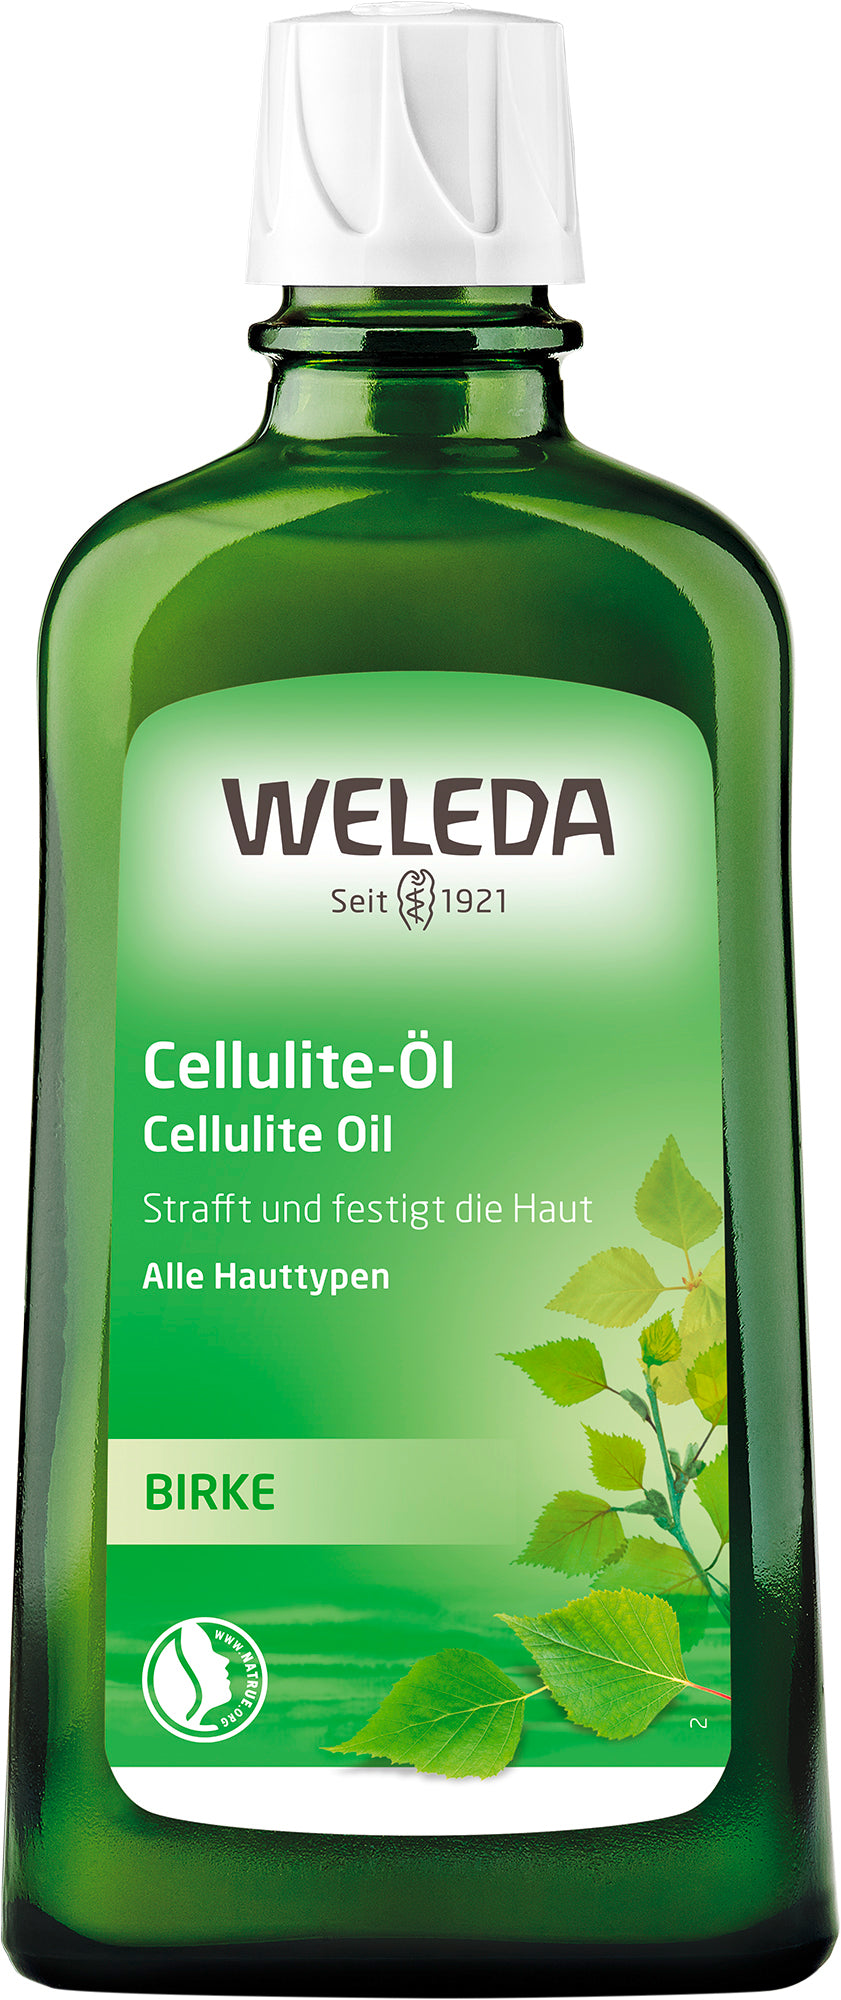 Weleda - Birken Cellulite-Öl 200 ml